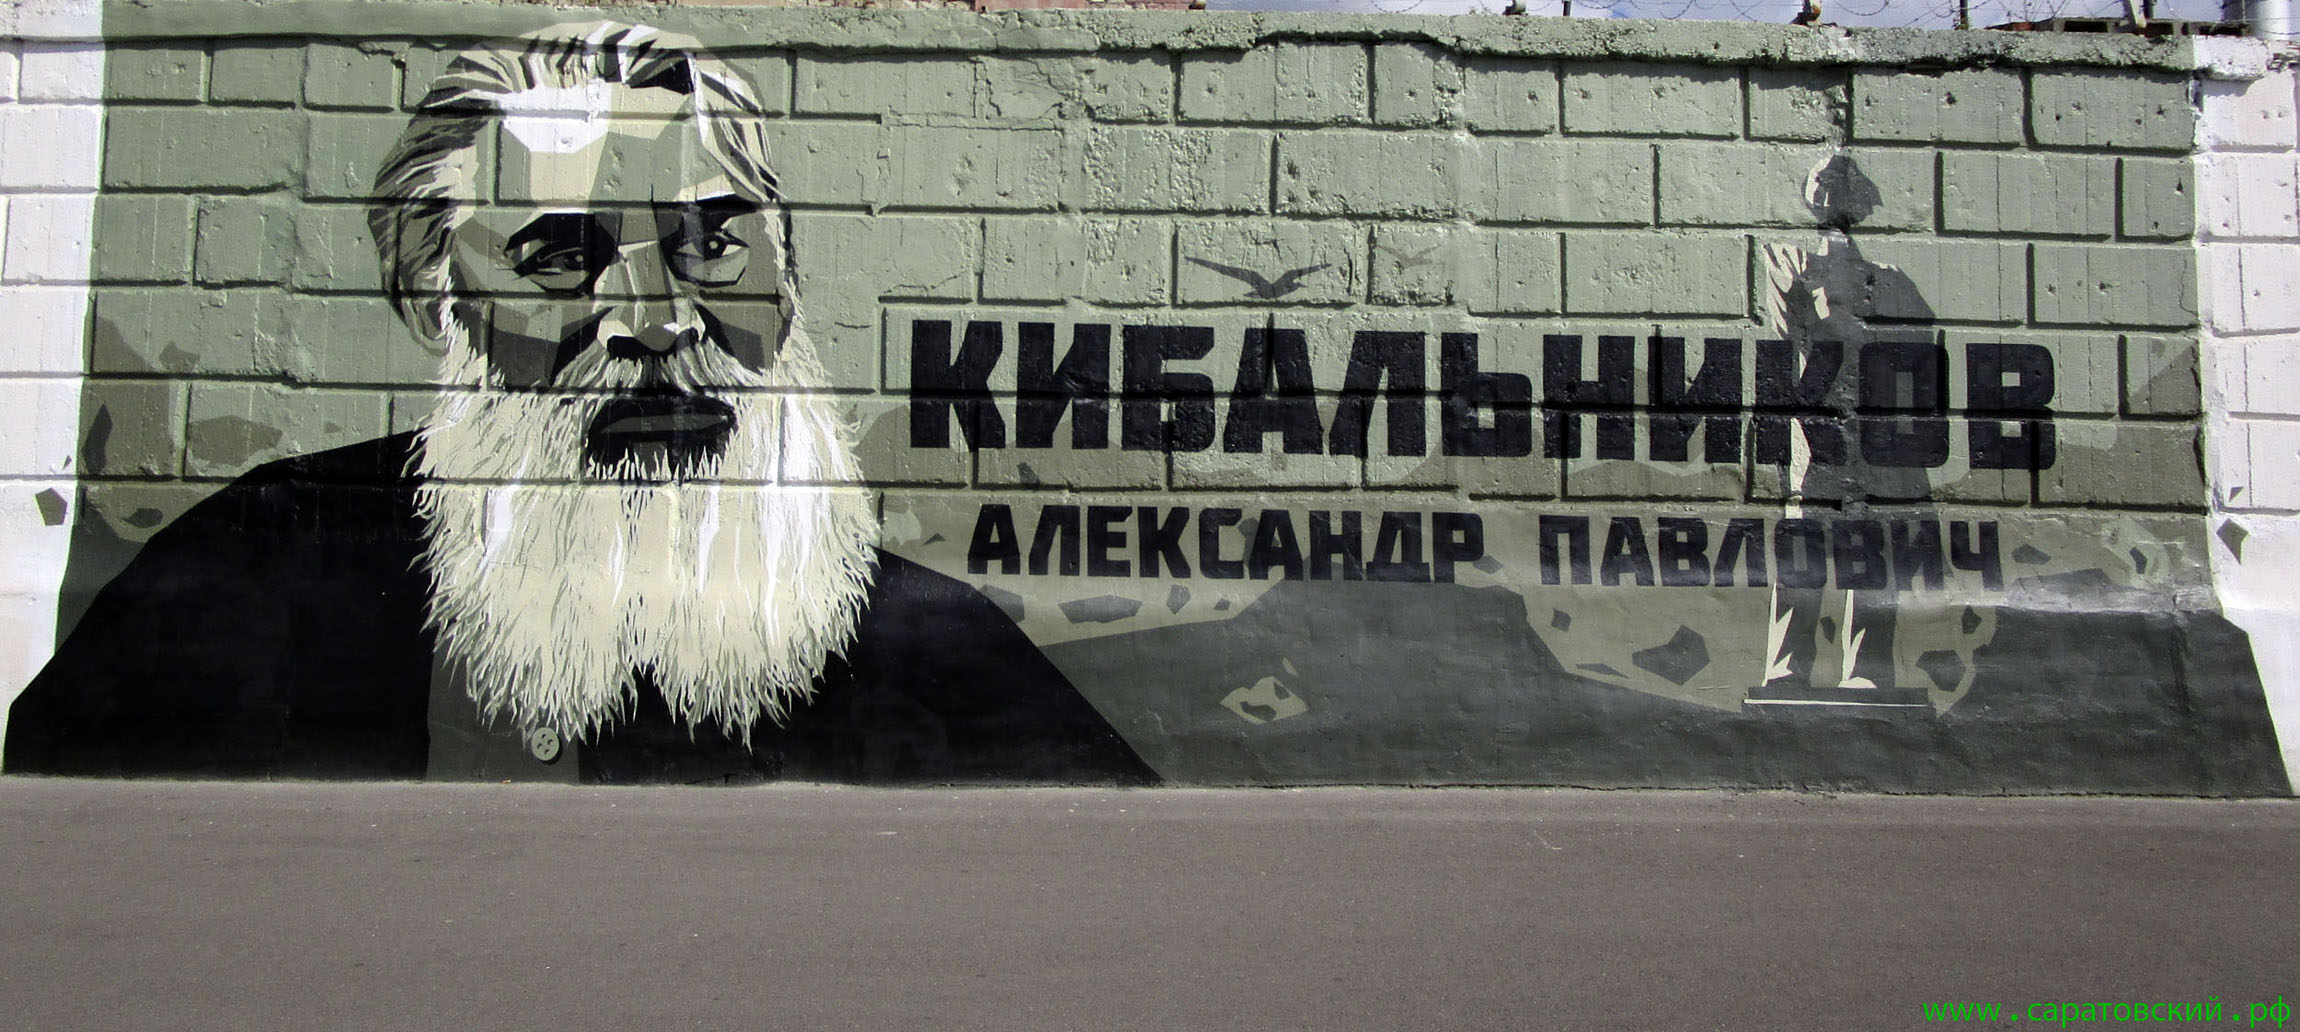 Saratov quayside graffiti: Alexander Kibalnikov and Saratov, Russia